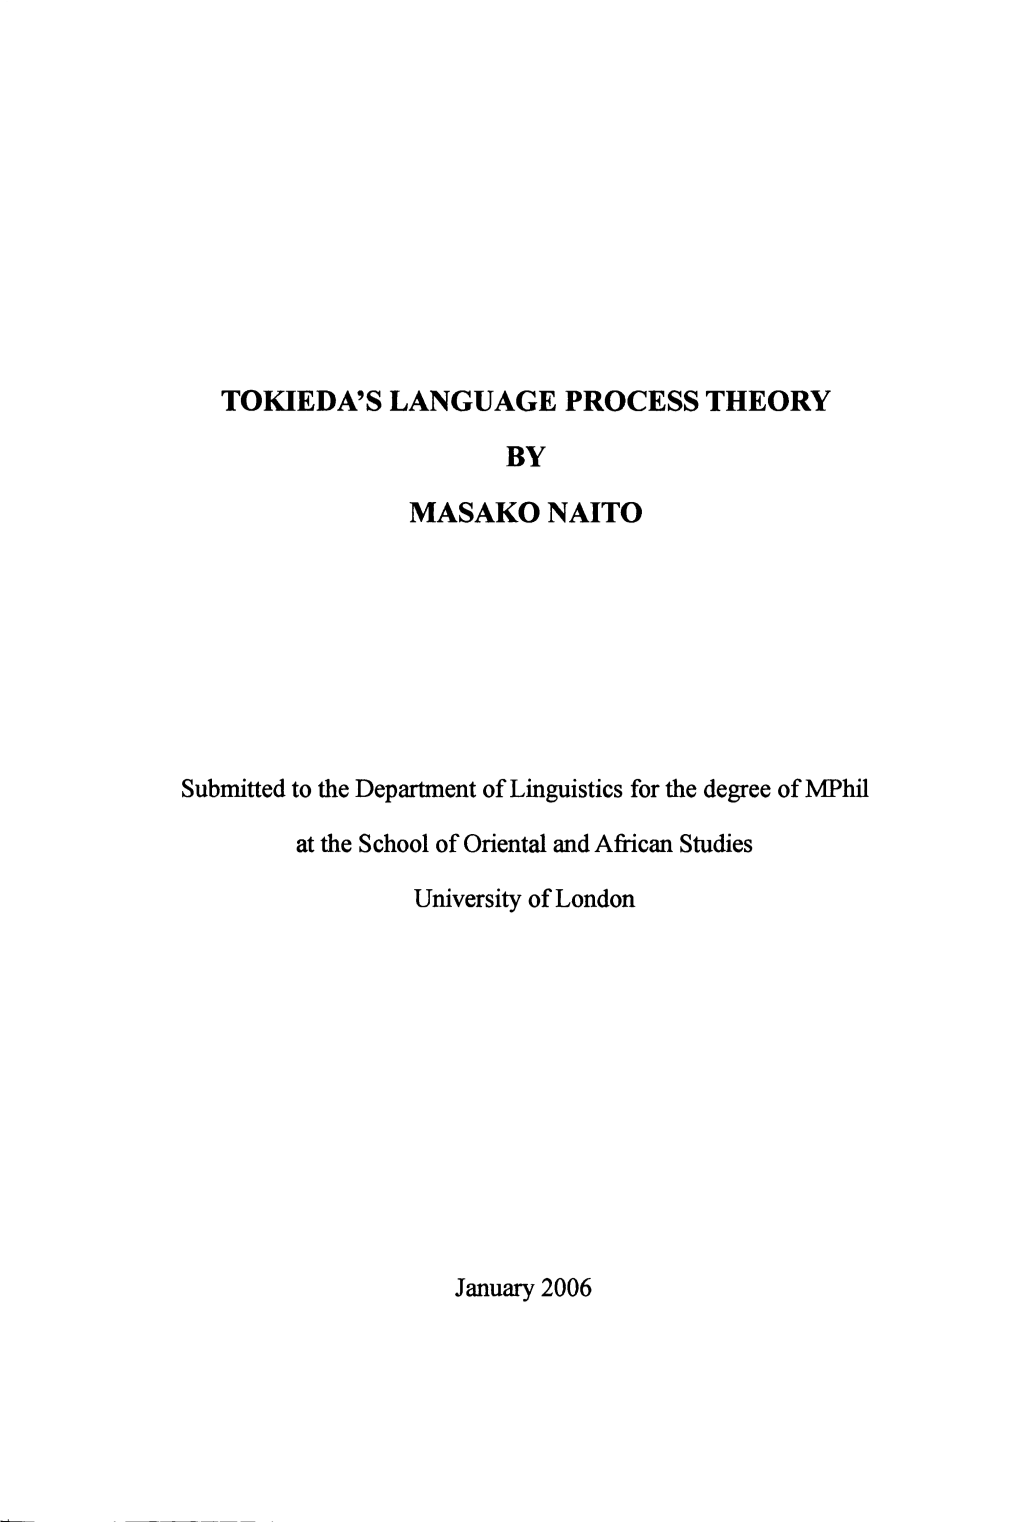 Tokieda's Language Process Theory by Masako Naito